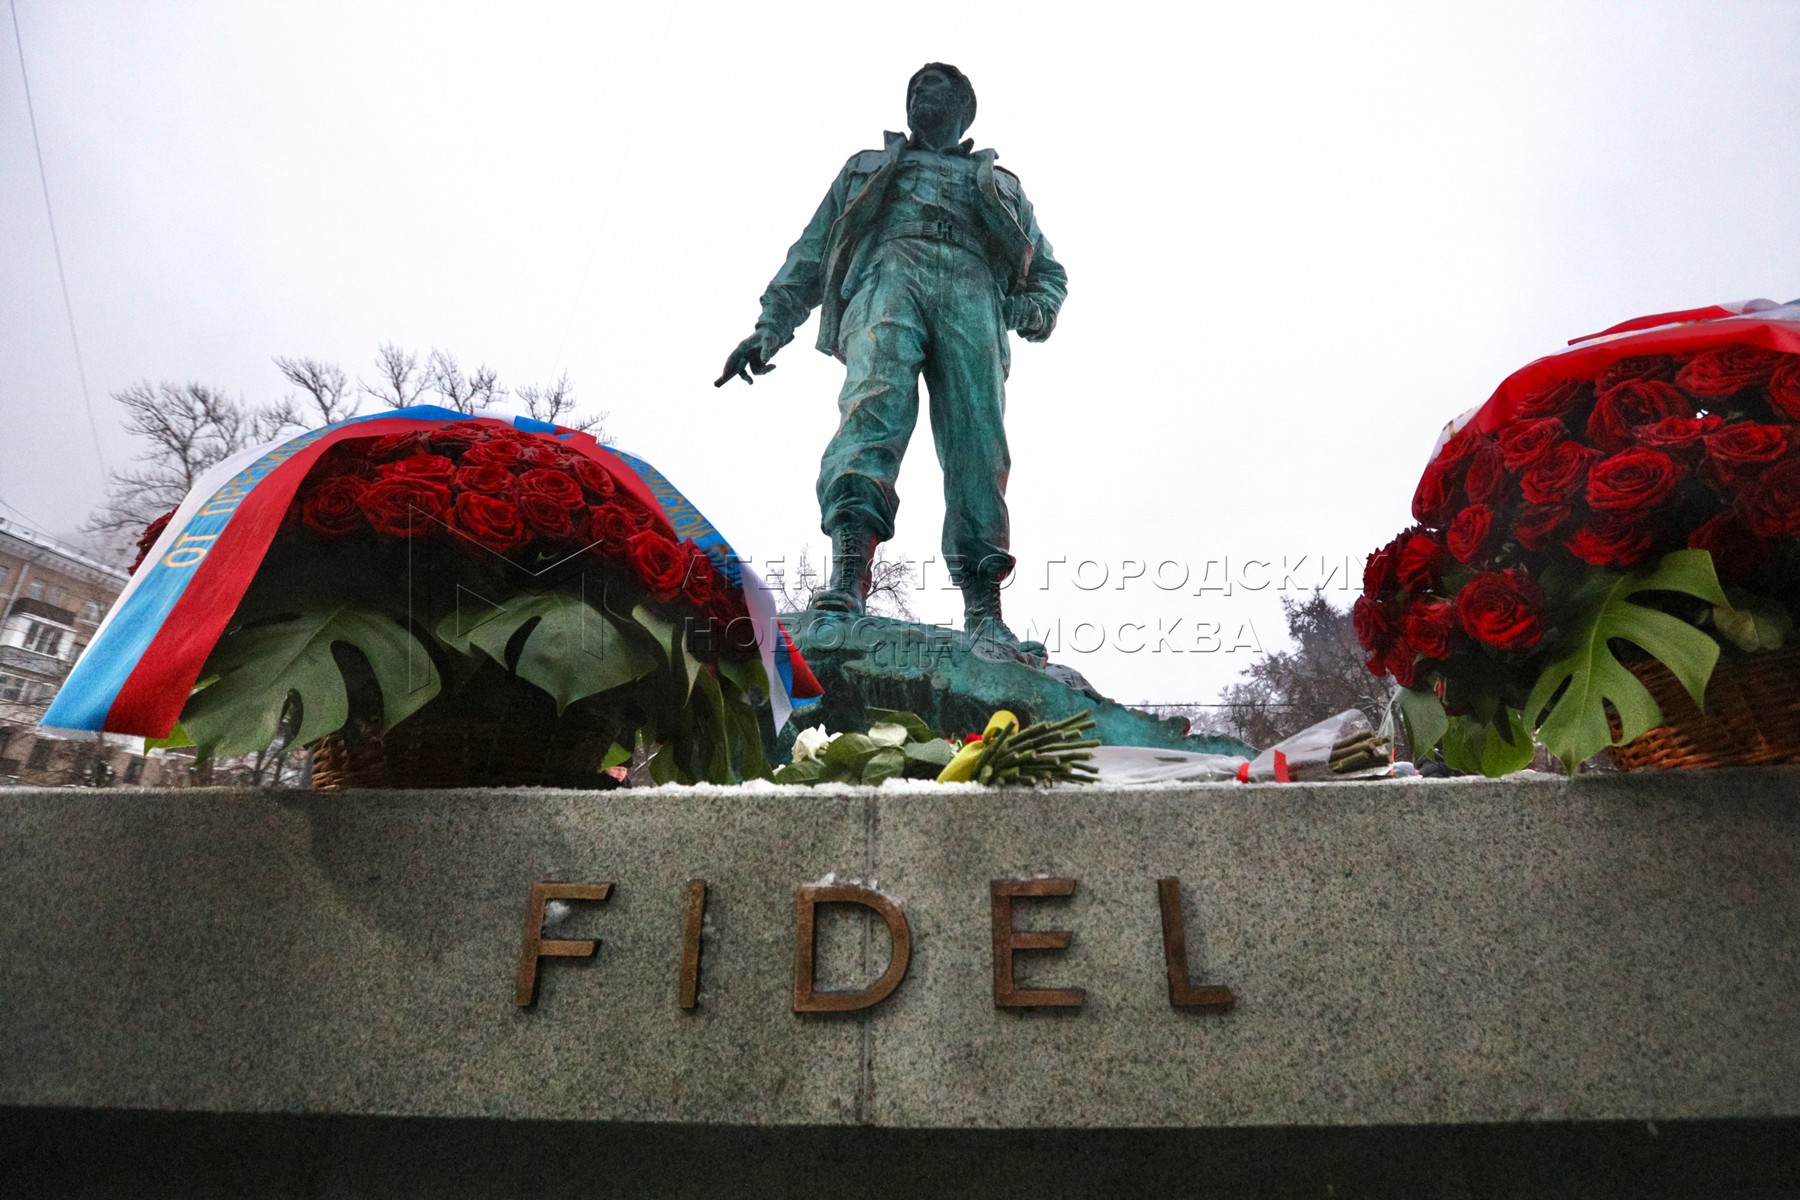 Monument to Fidel Castro